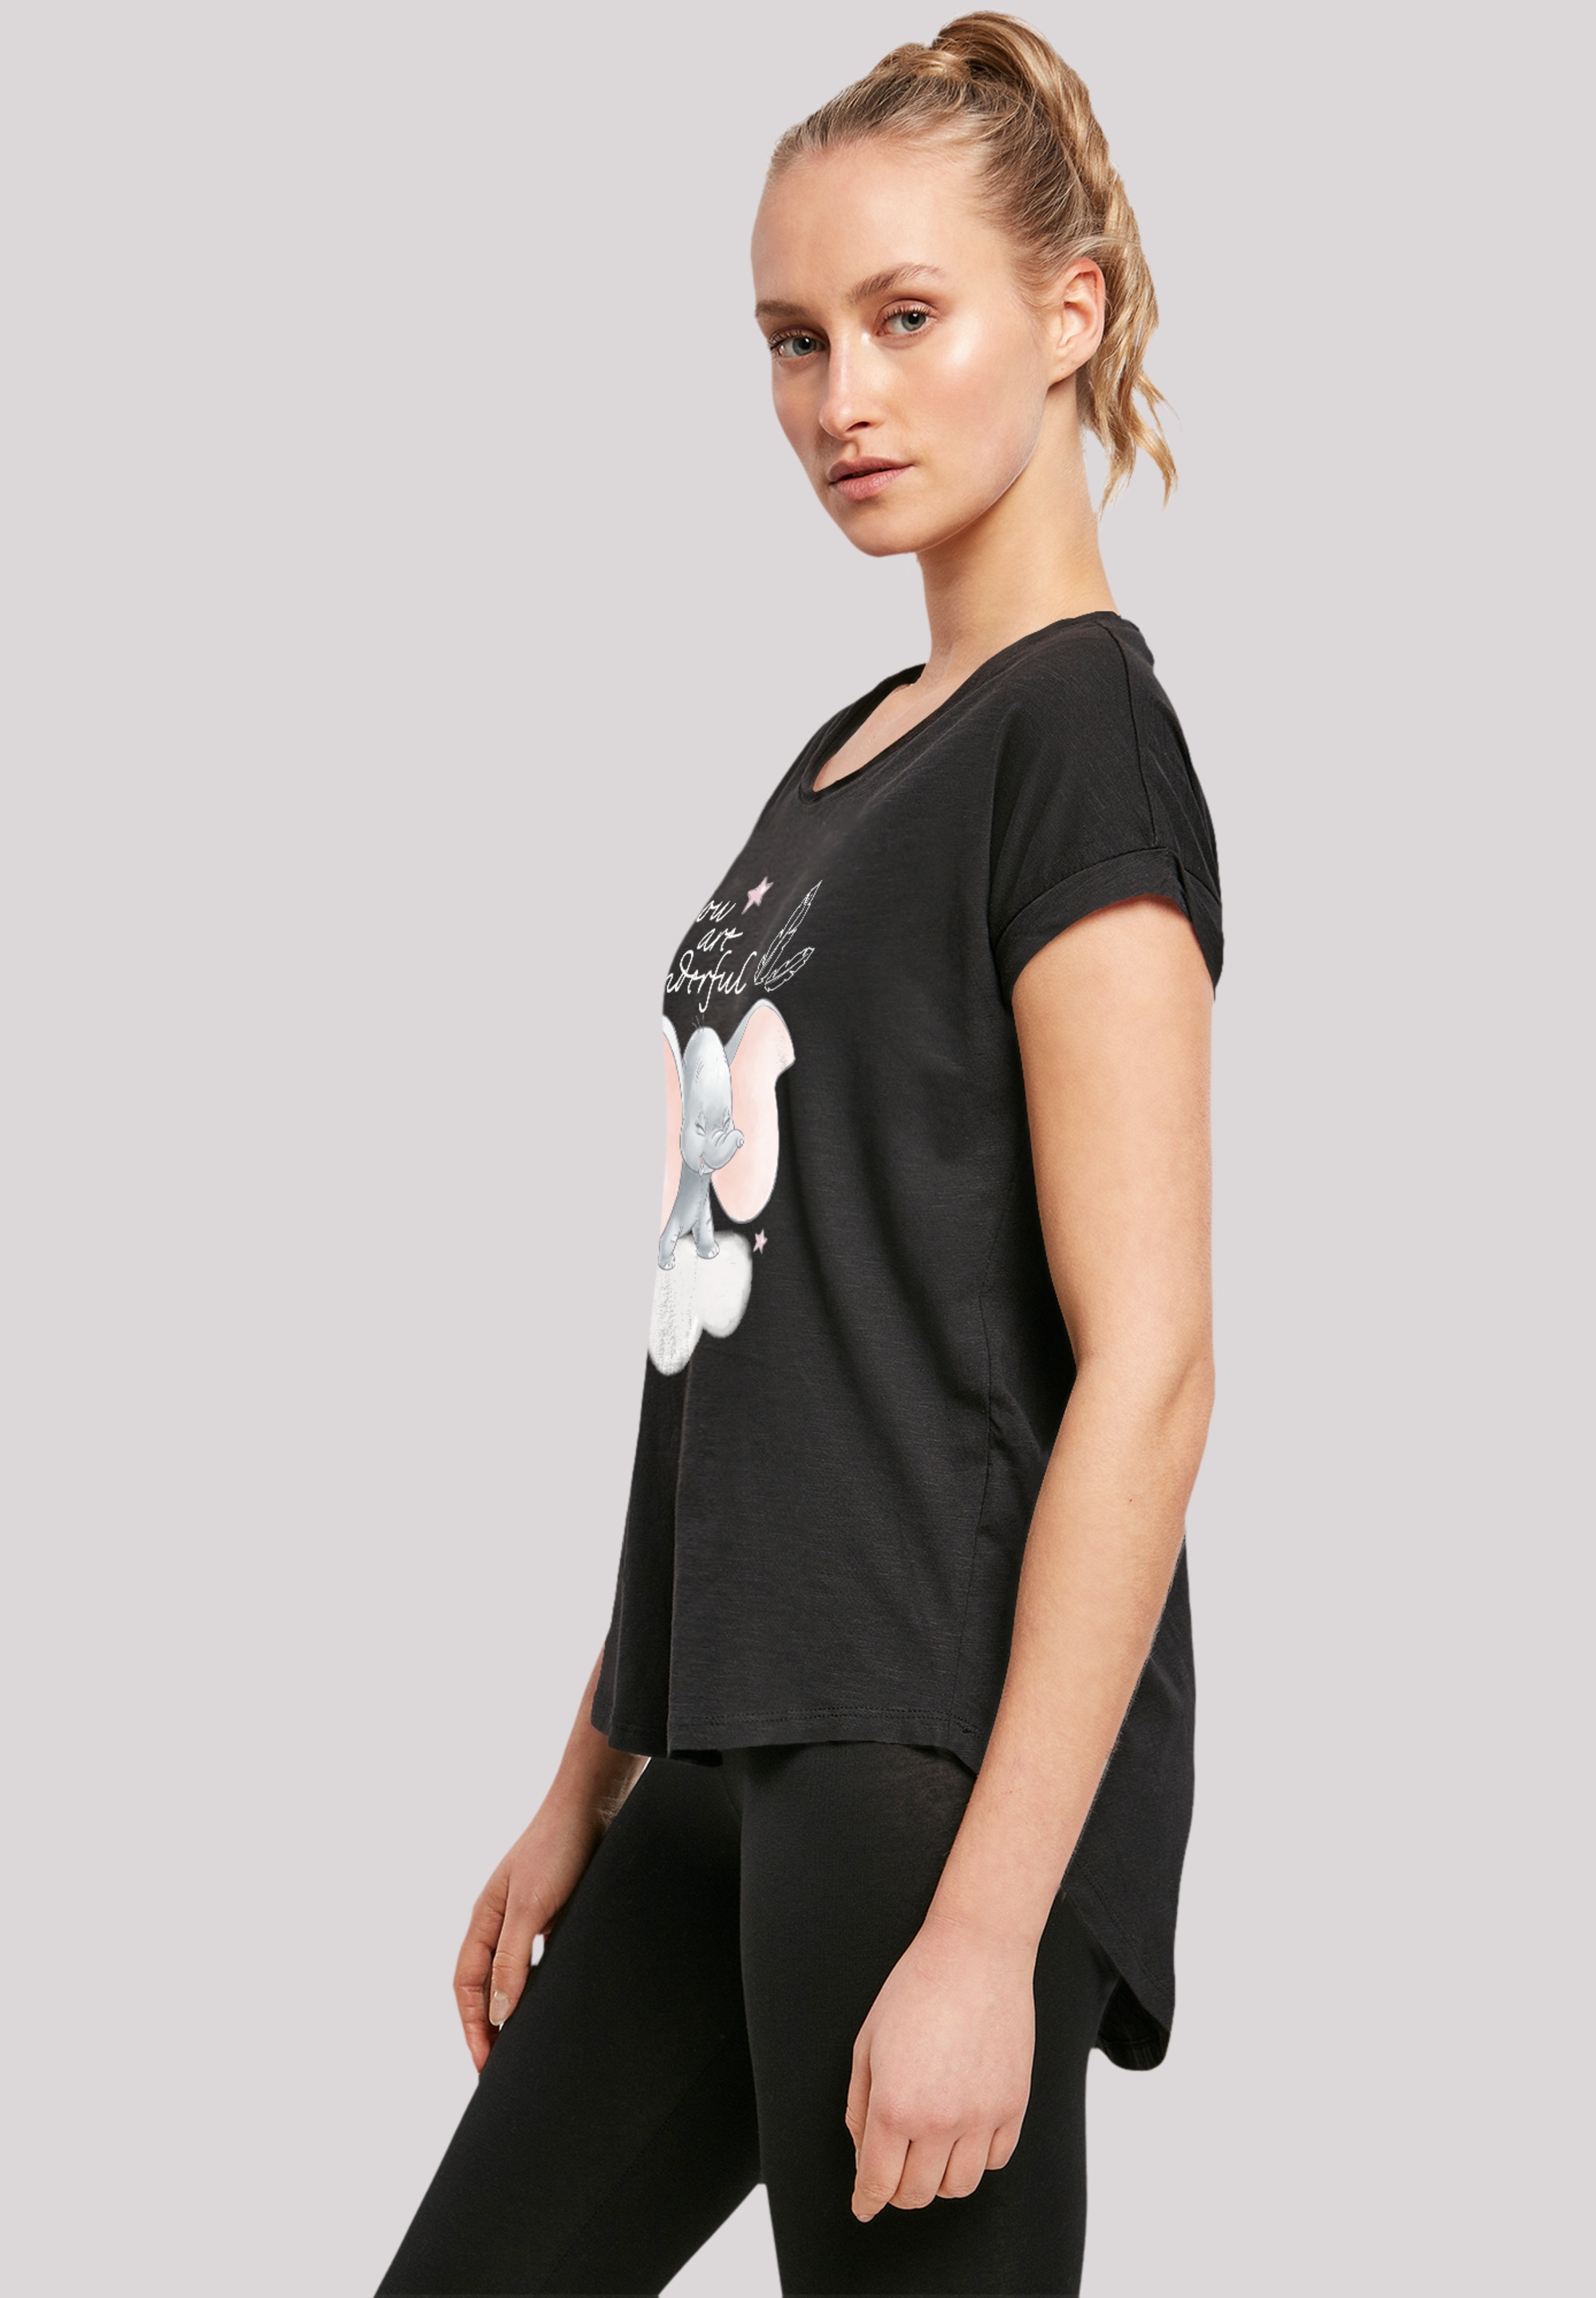 F4NT4STIC T-Shirt Premium kaufen | Are walking »Disney Wonderful«, online You Qualität I\'m Dumbo